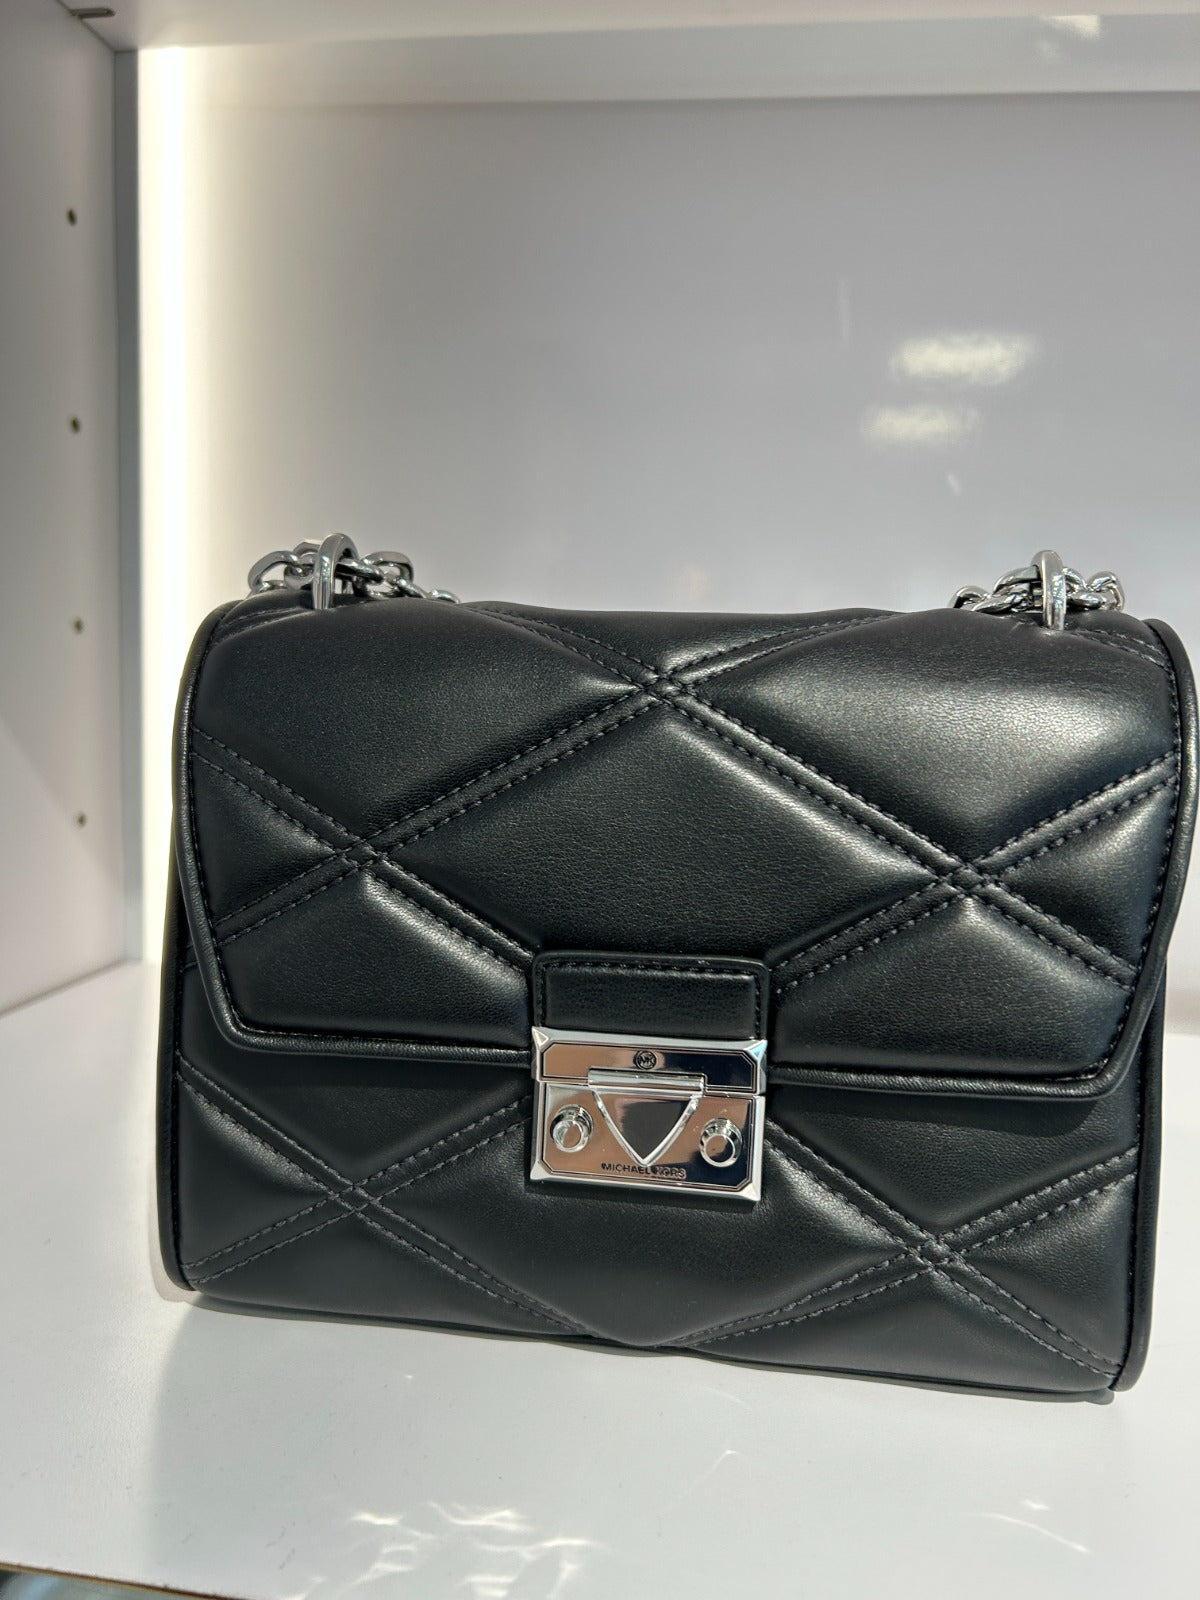 Load image into Gallery viewer, Michael Kors Serena Medium Flap Shoulder Bag In Black Silver Hardware (Pre-Order)
